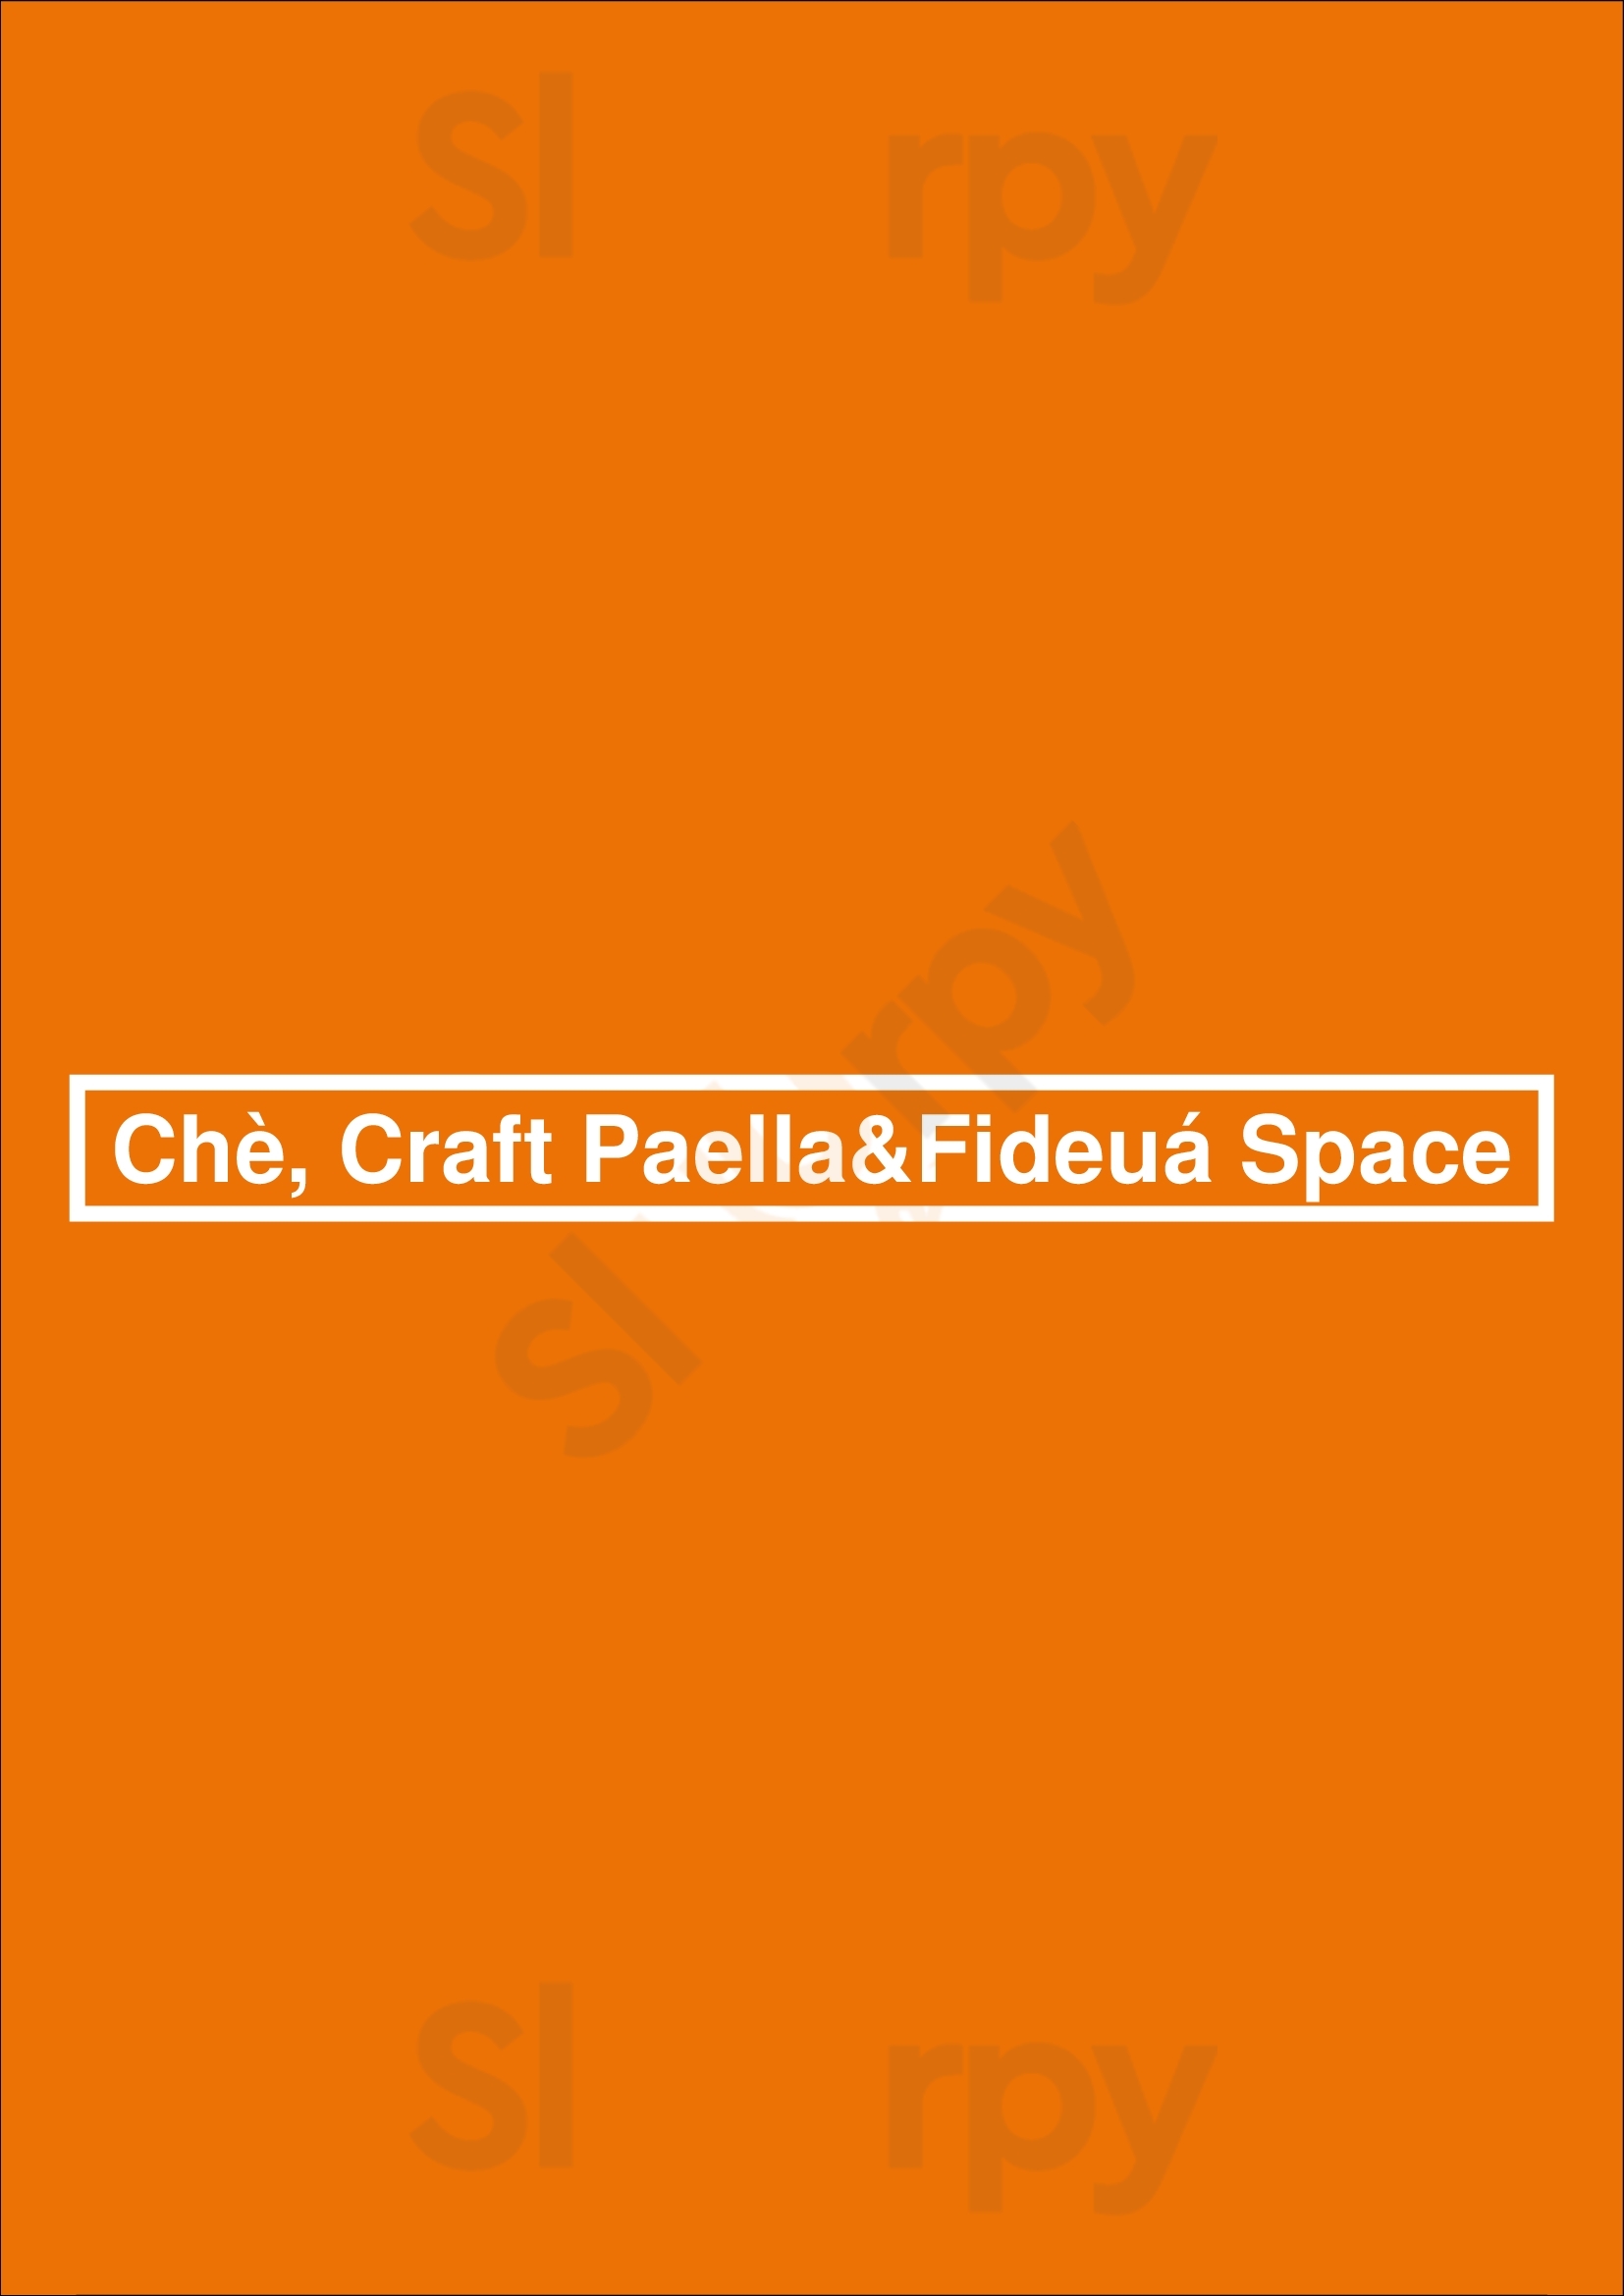 Chè! Craft Paella&fideuá Space Jerez de la Frontera Menu - 1